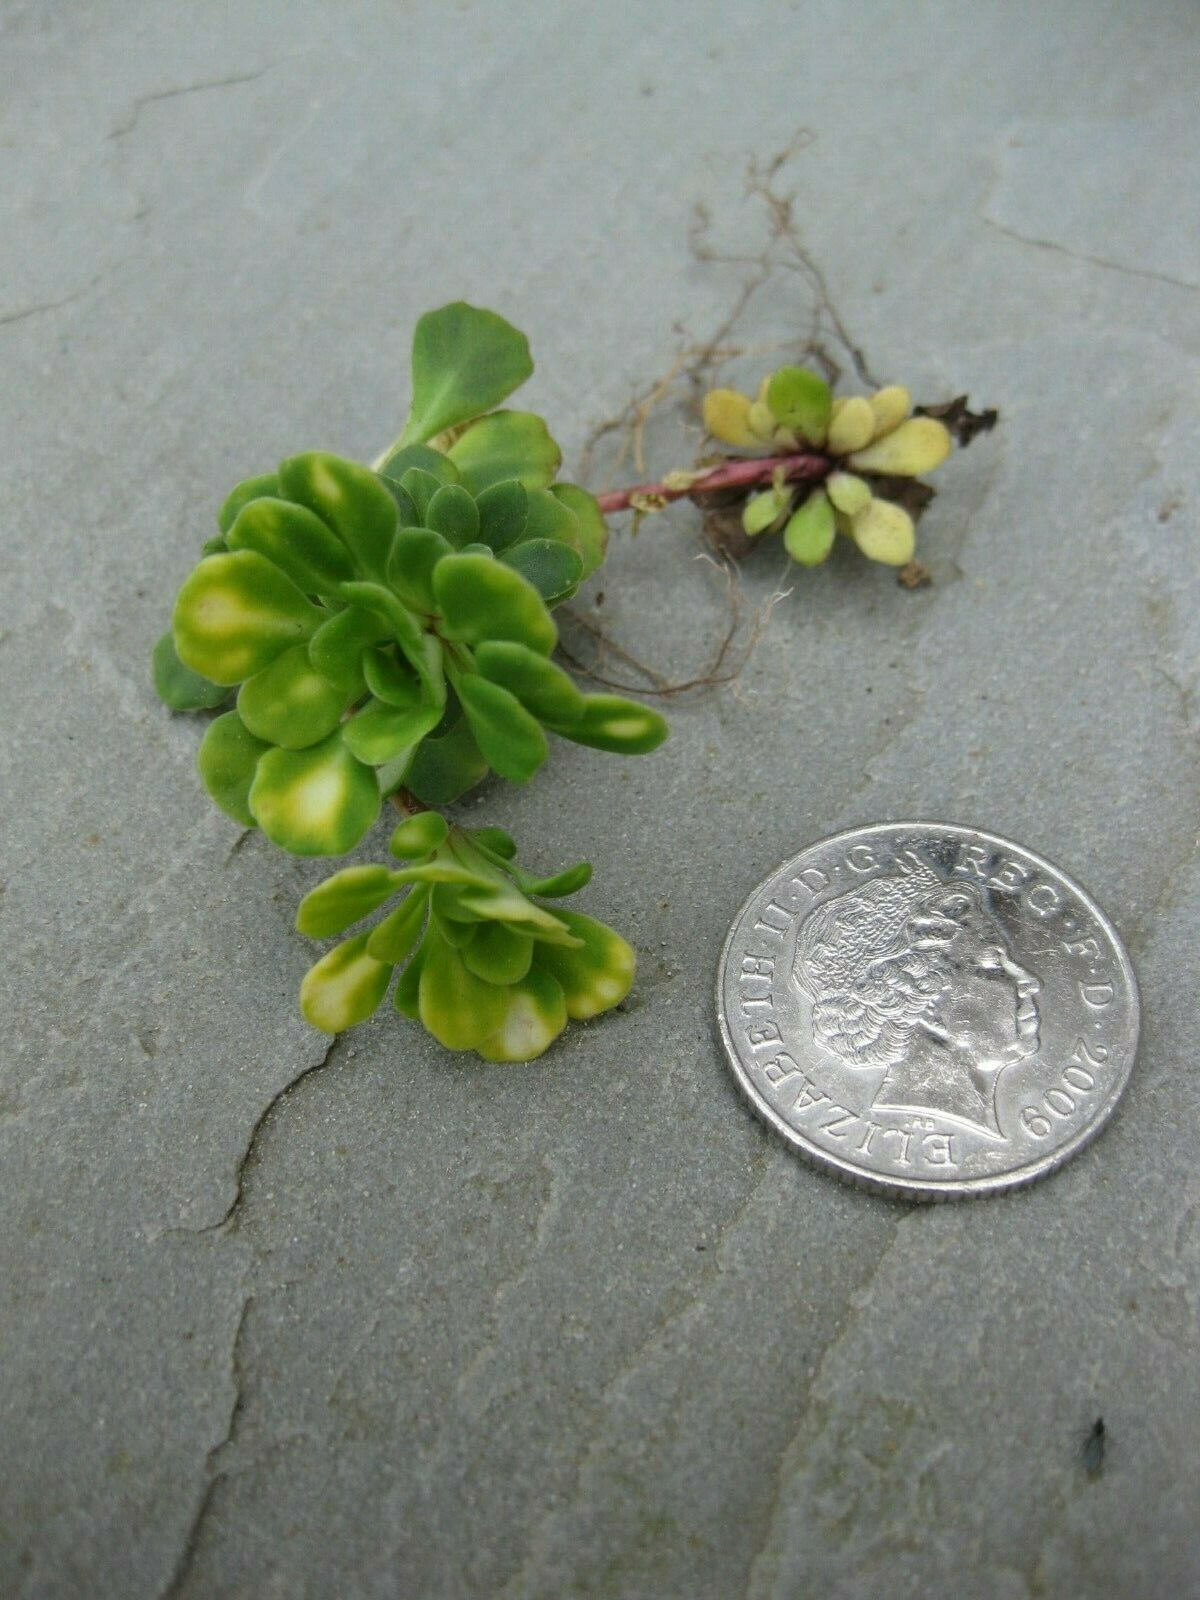 6 x Lesser London Pride Saxifraga Cuneifolia 'Variegata' Hardy bare root alpine offsets